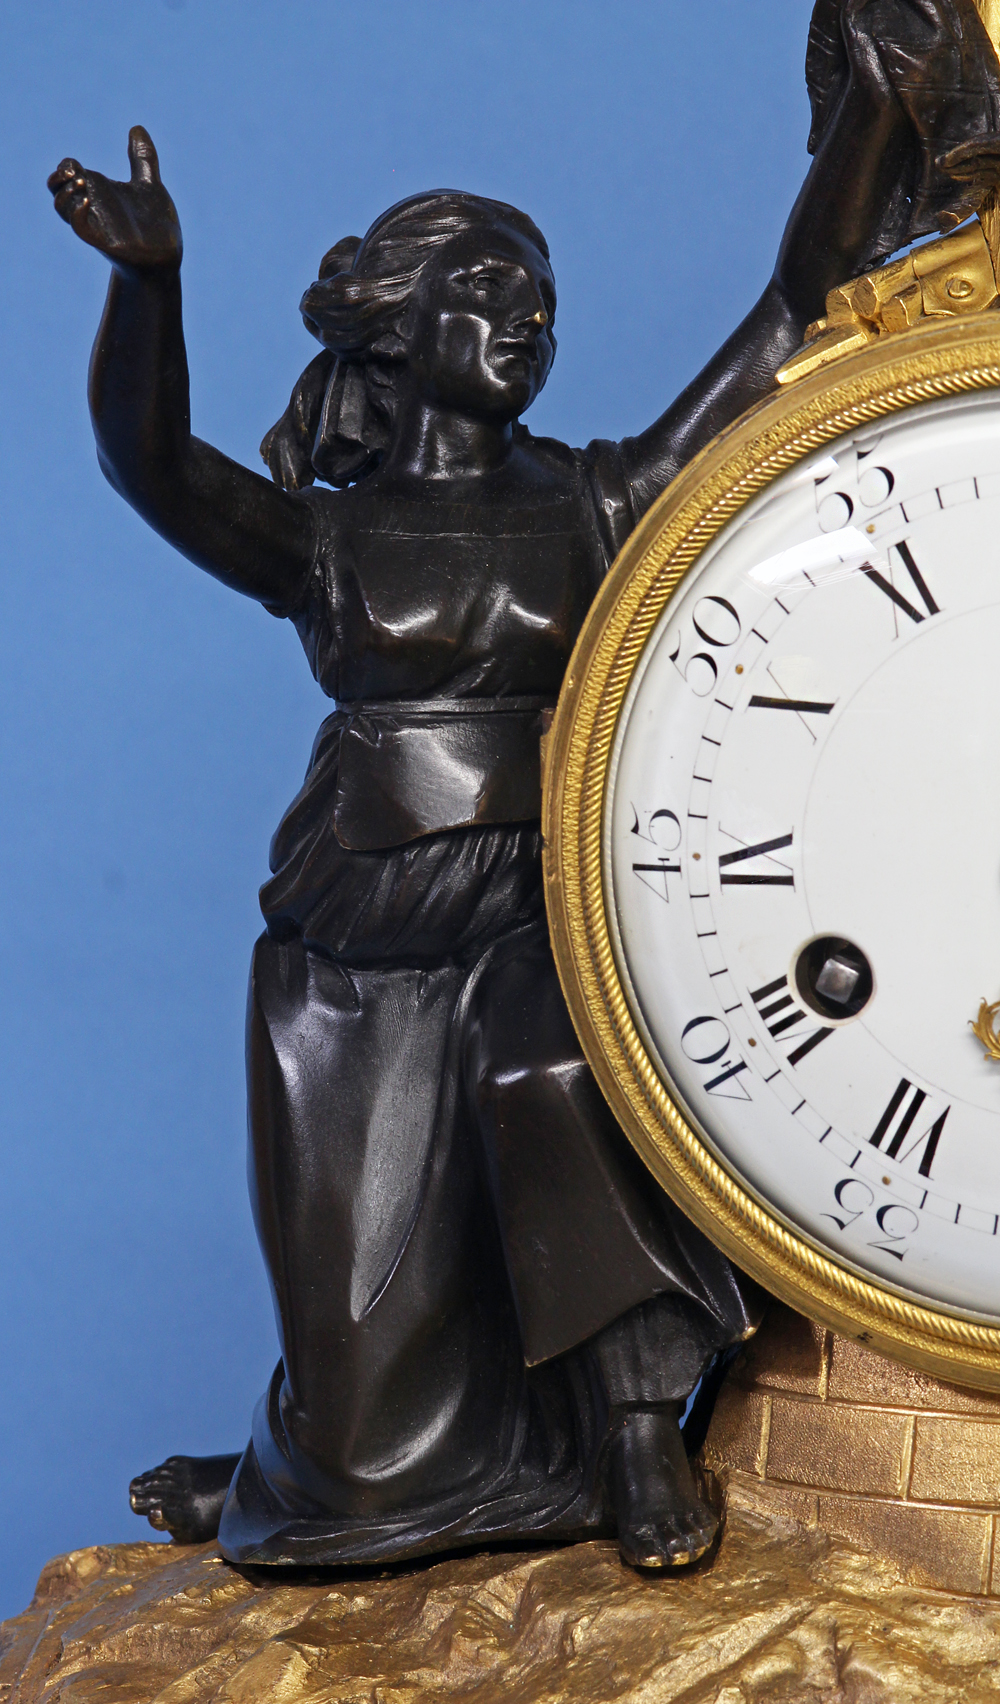 Louis XVI French Figural Mantle Clock